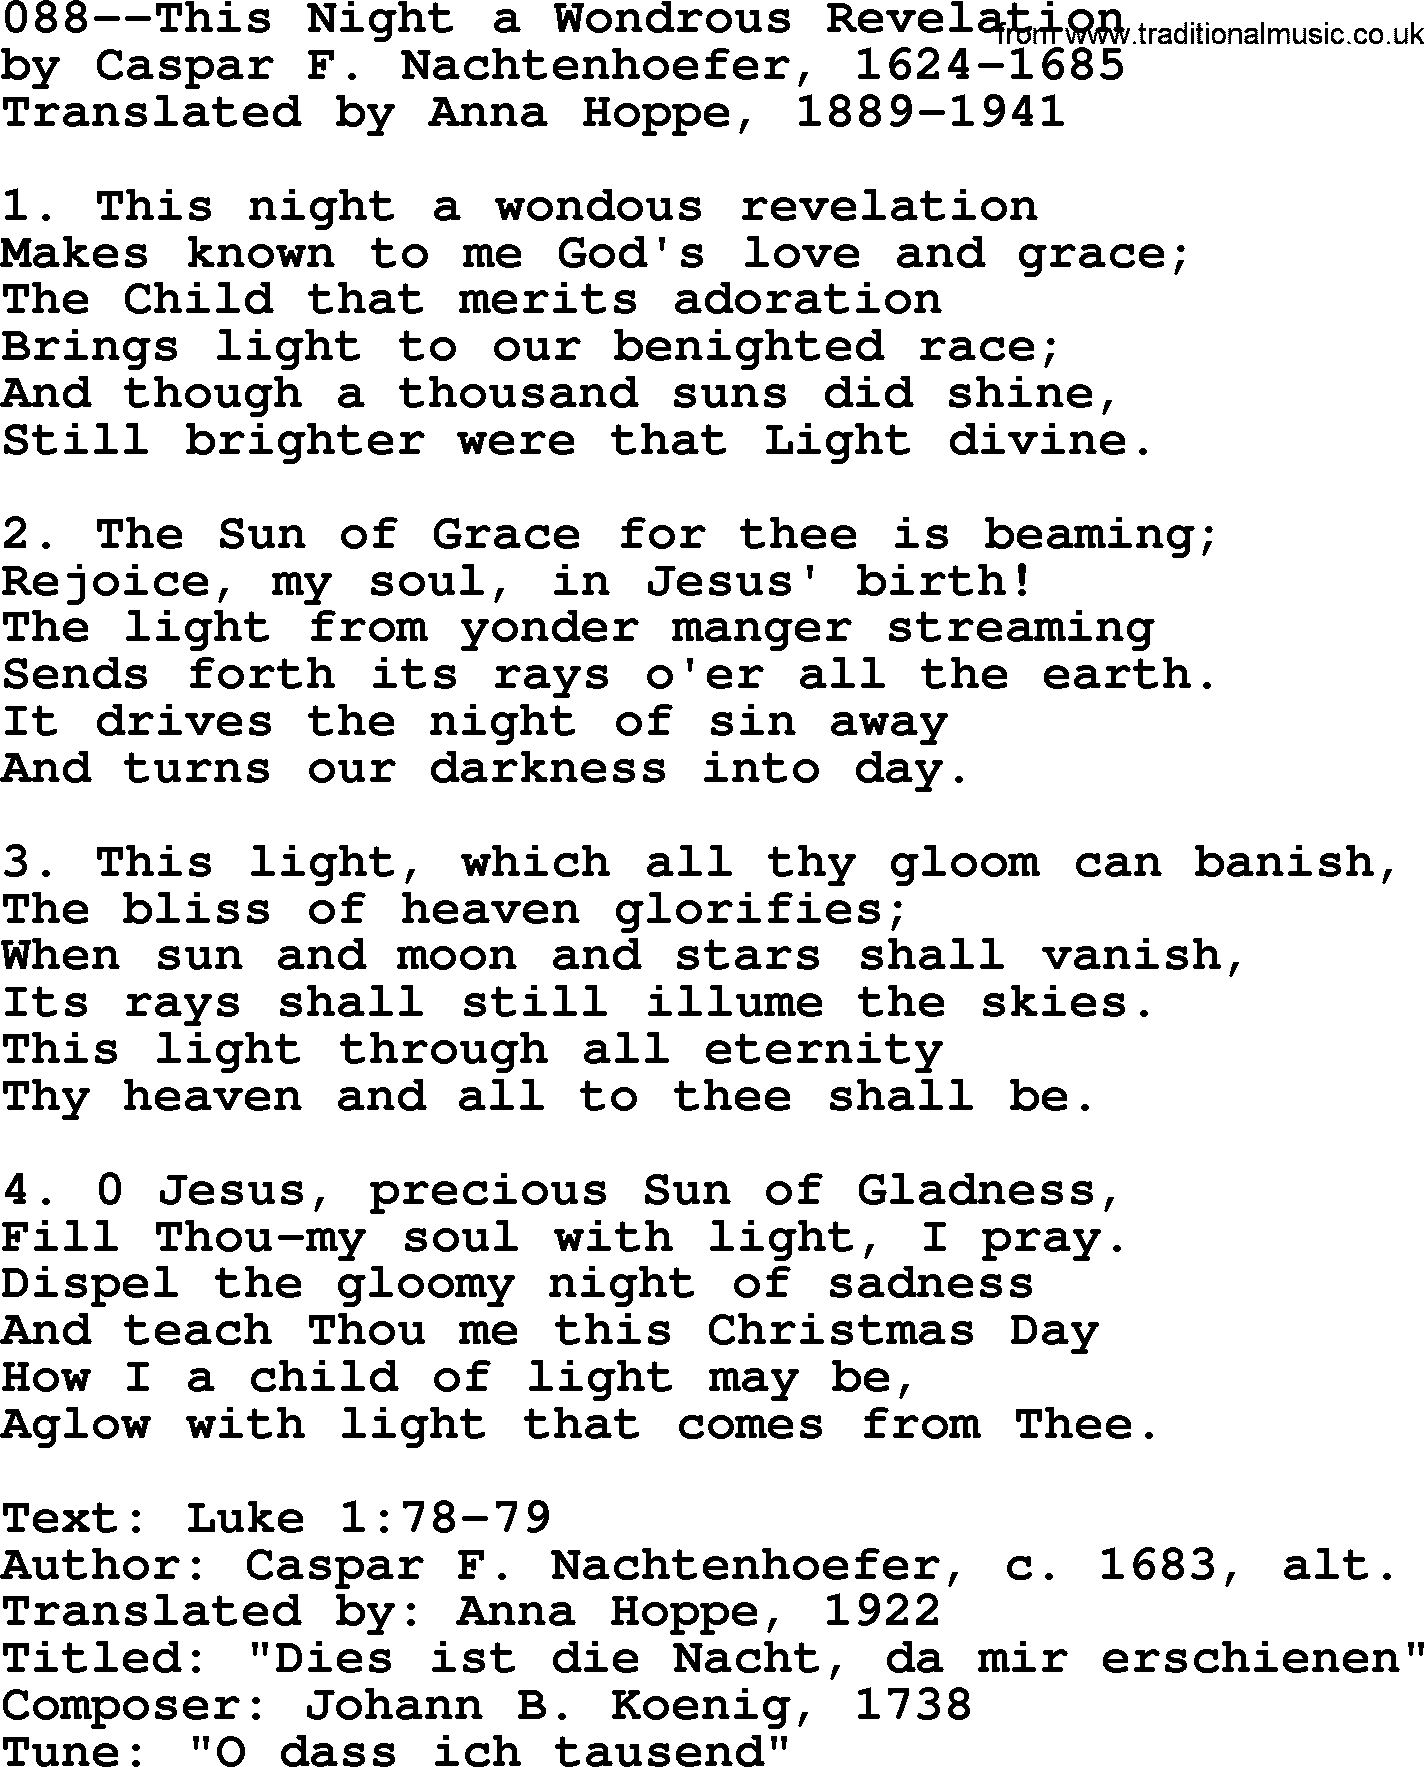 Lutheran Hymn: 088--This Night a Wondrous Revelation.txt lyrics with PDF